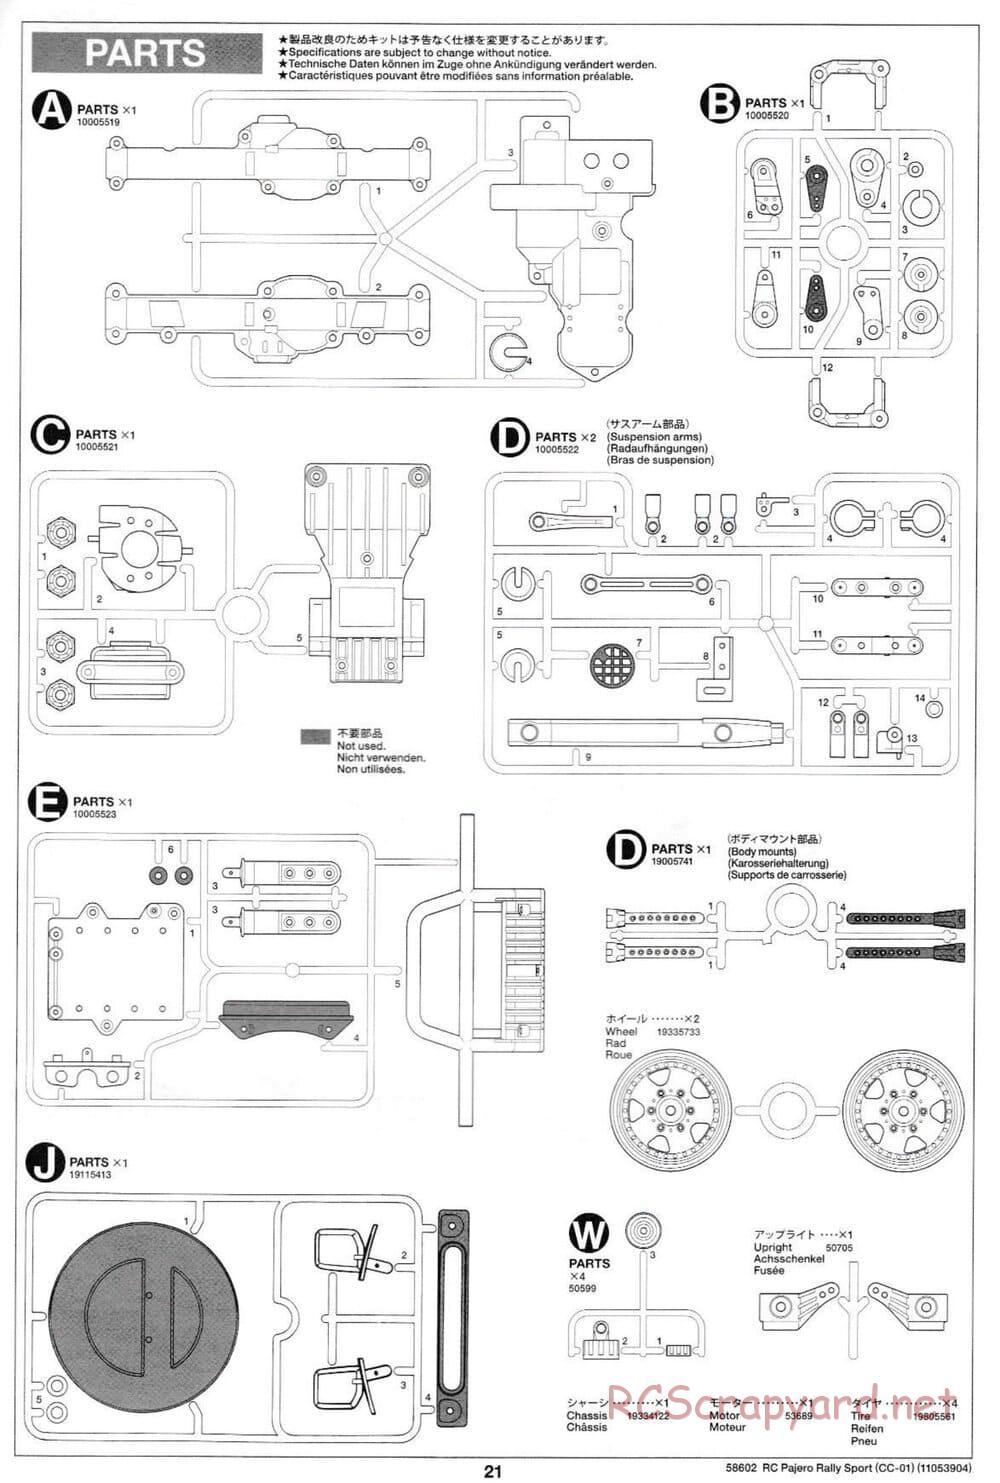 Tamiya - Mitsubishi Pajero Rally Sport - CC-01 Chassis - Manual - Page 21